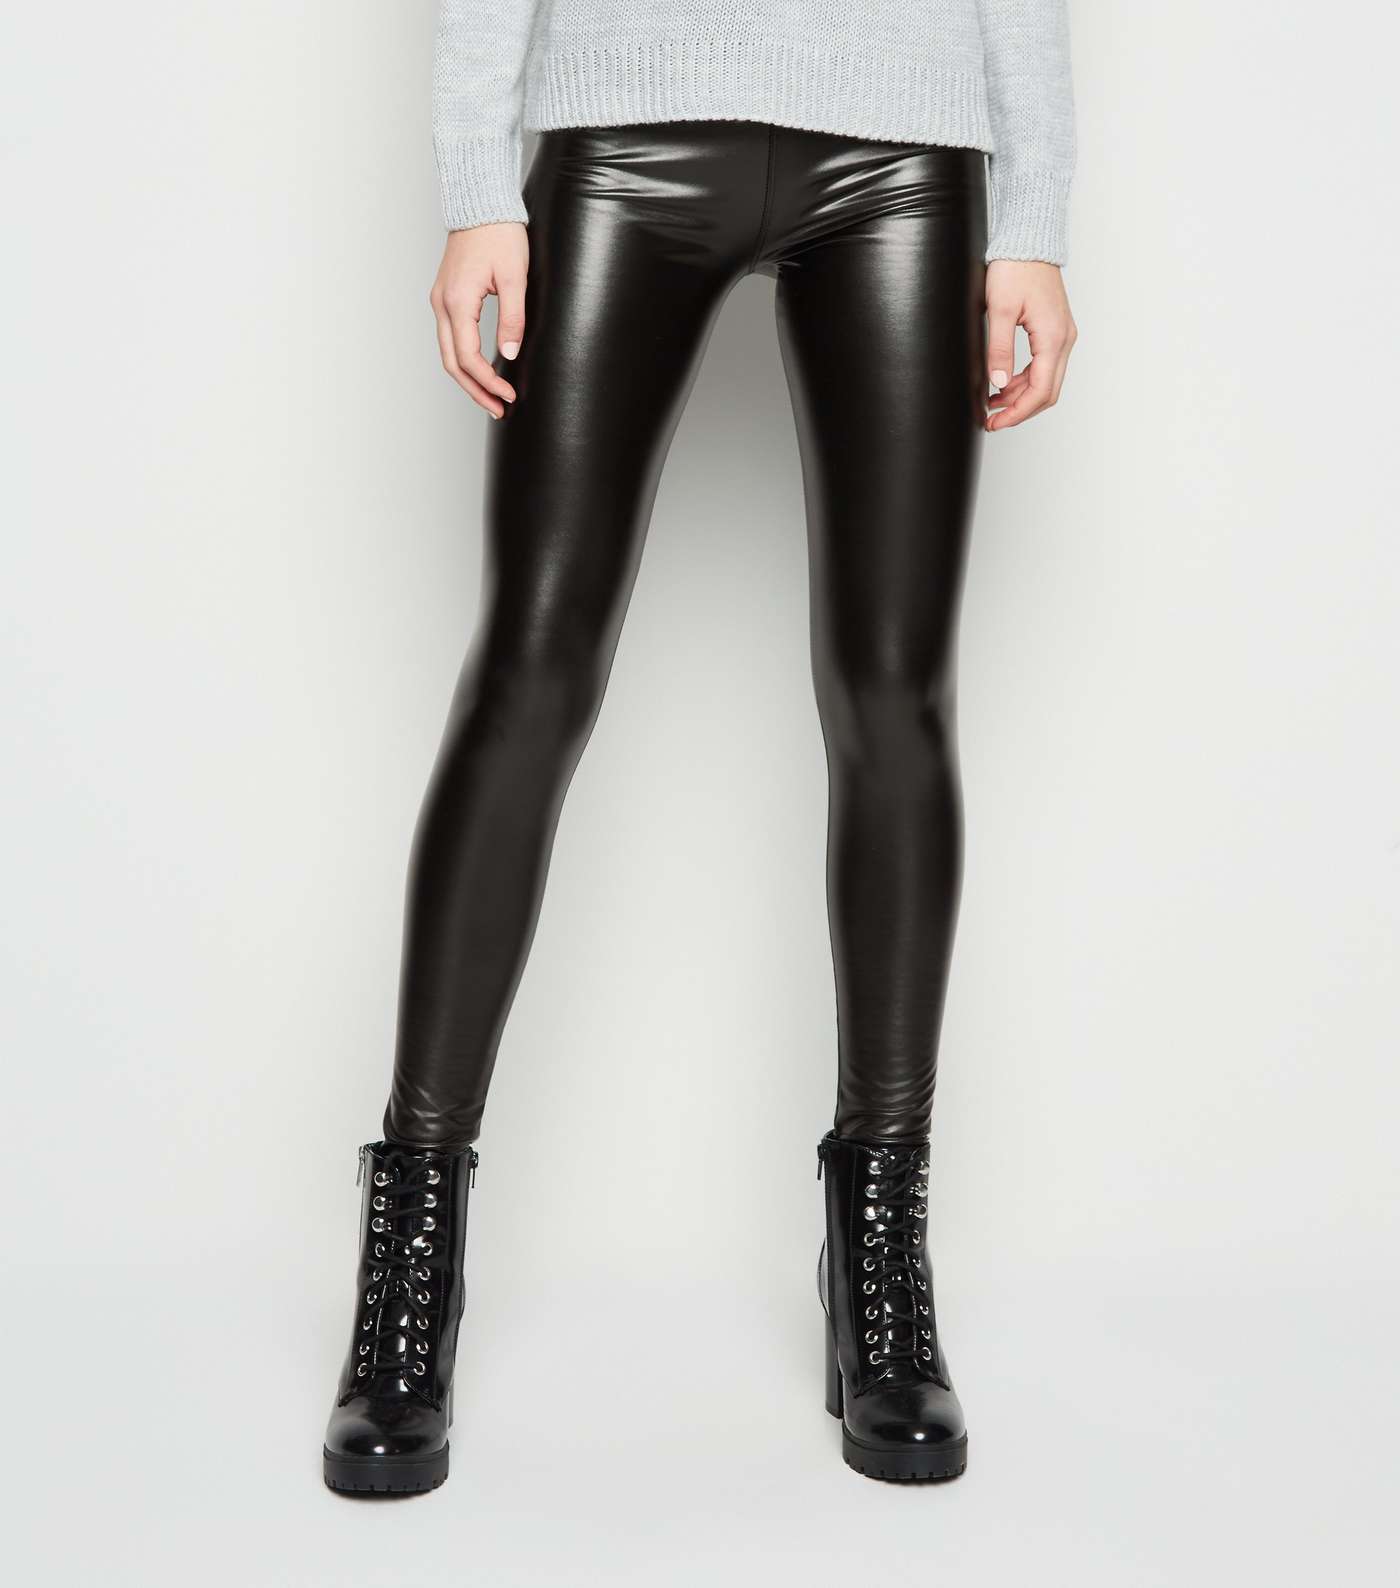 Cameo Rose Black Leather-Look Leggings Image 2